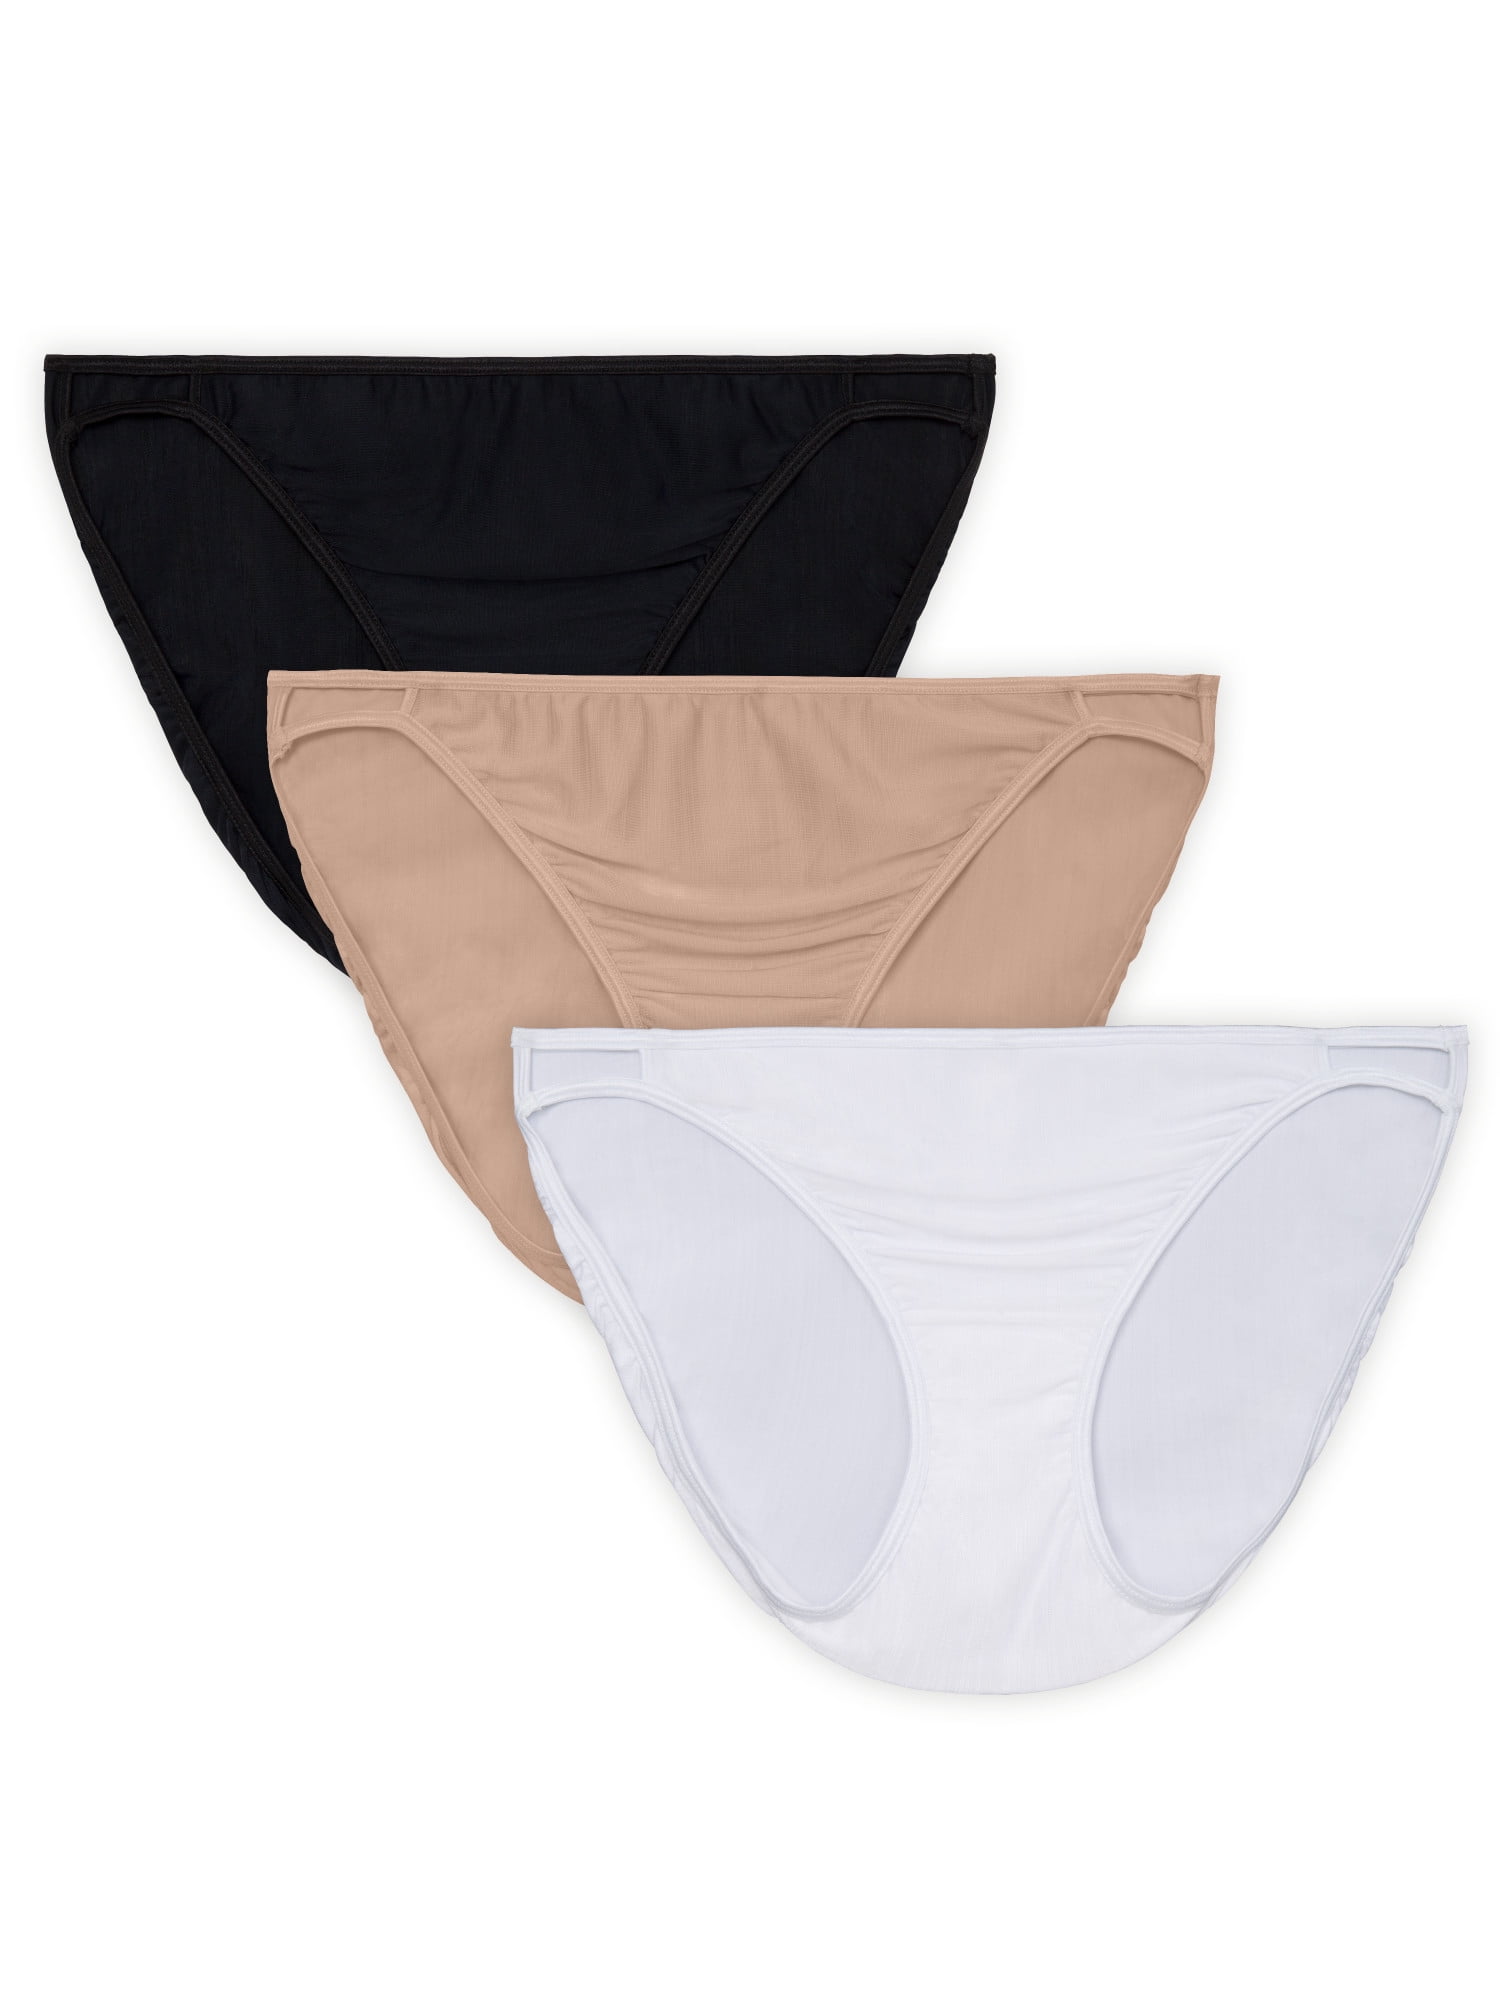 Women's Getaway Collection™, Cooling Mesh Bikini Underwear